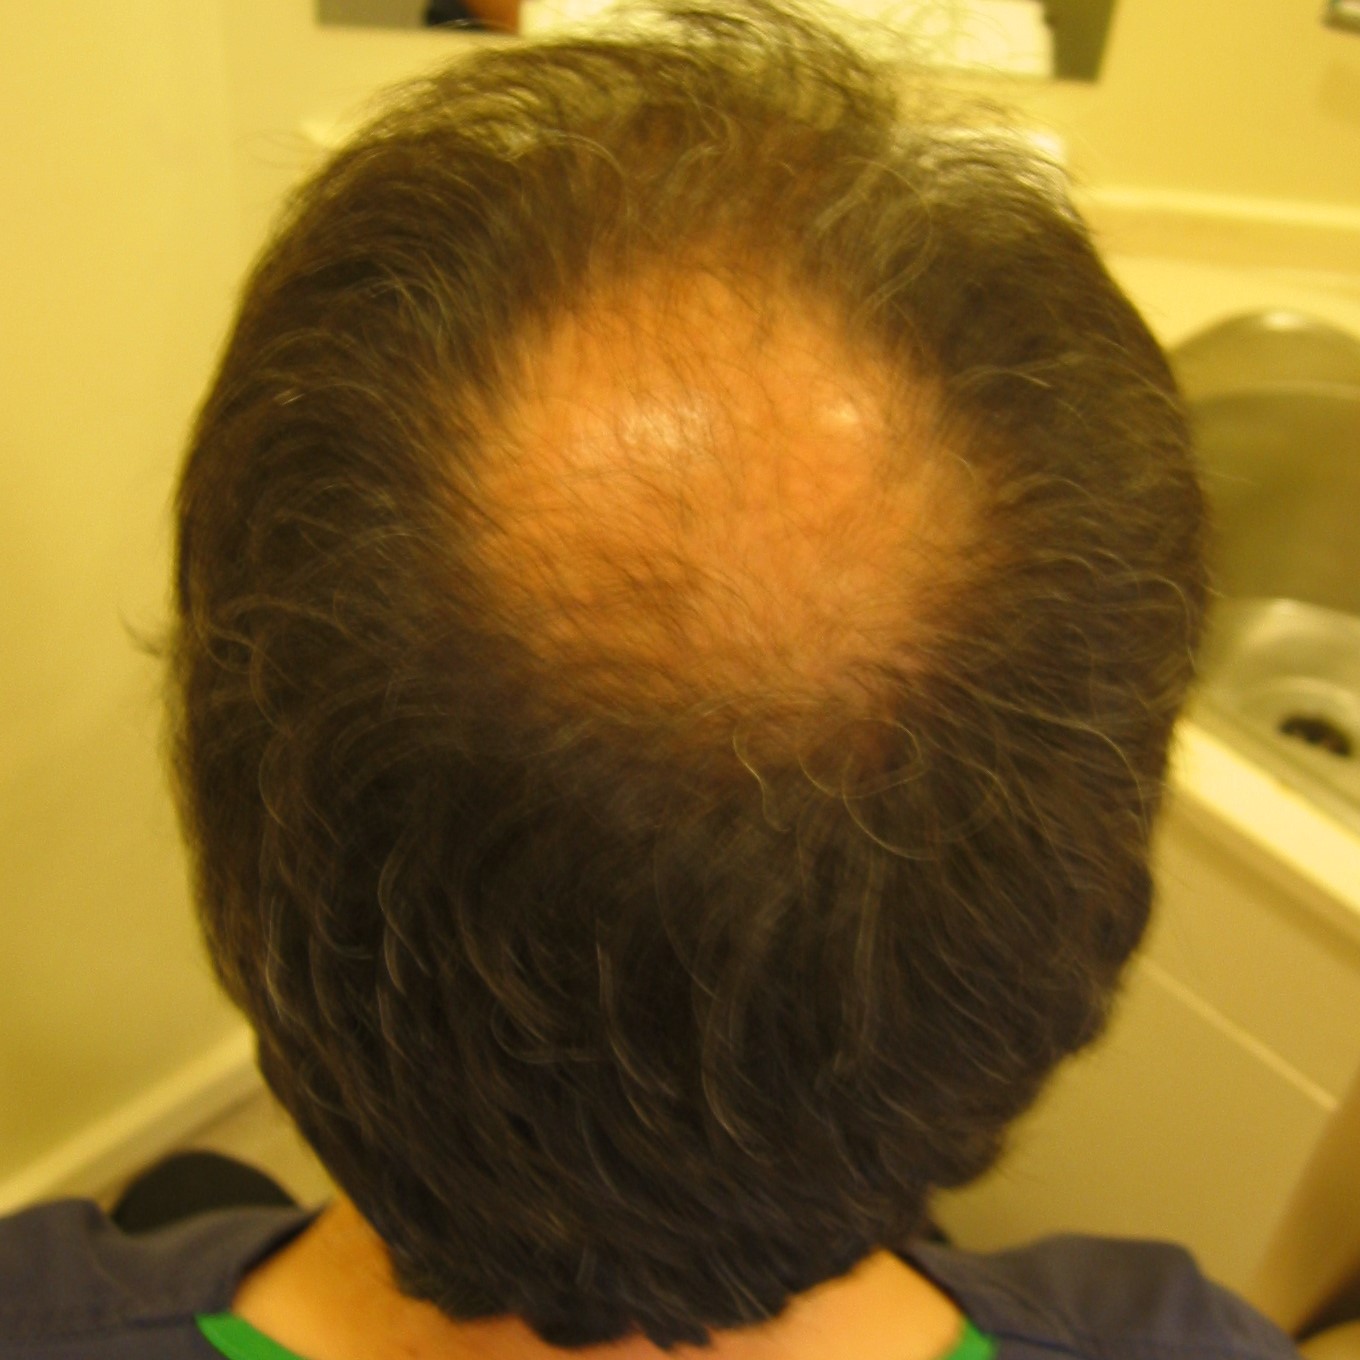 Double Crown Vs Balding: Differences, Symptoms, Treatments, Wimpole Clinic